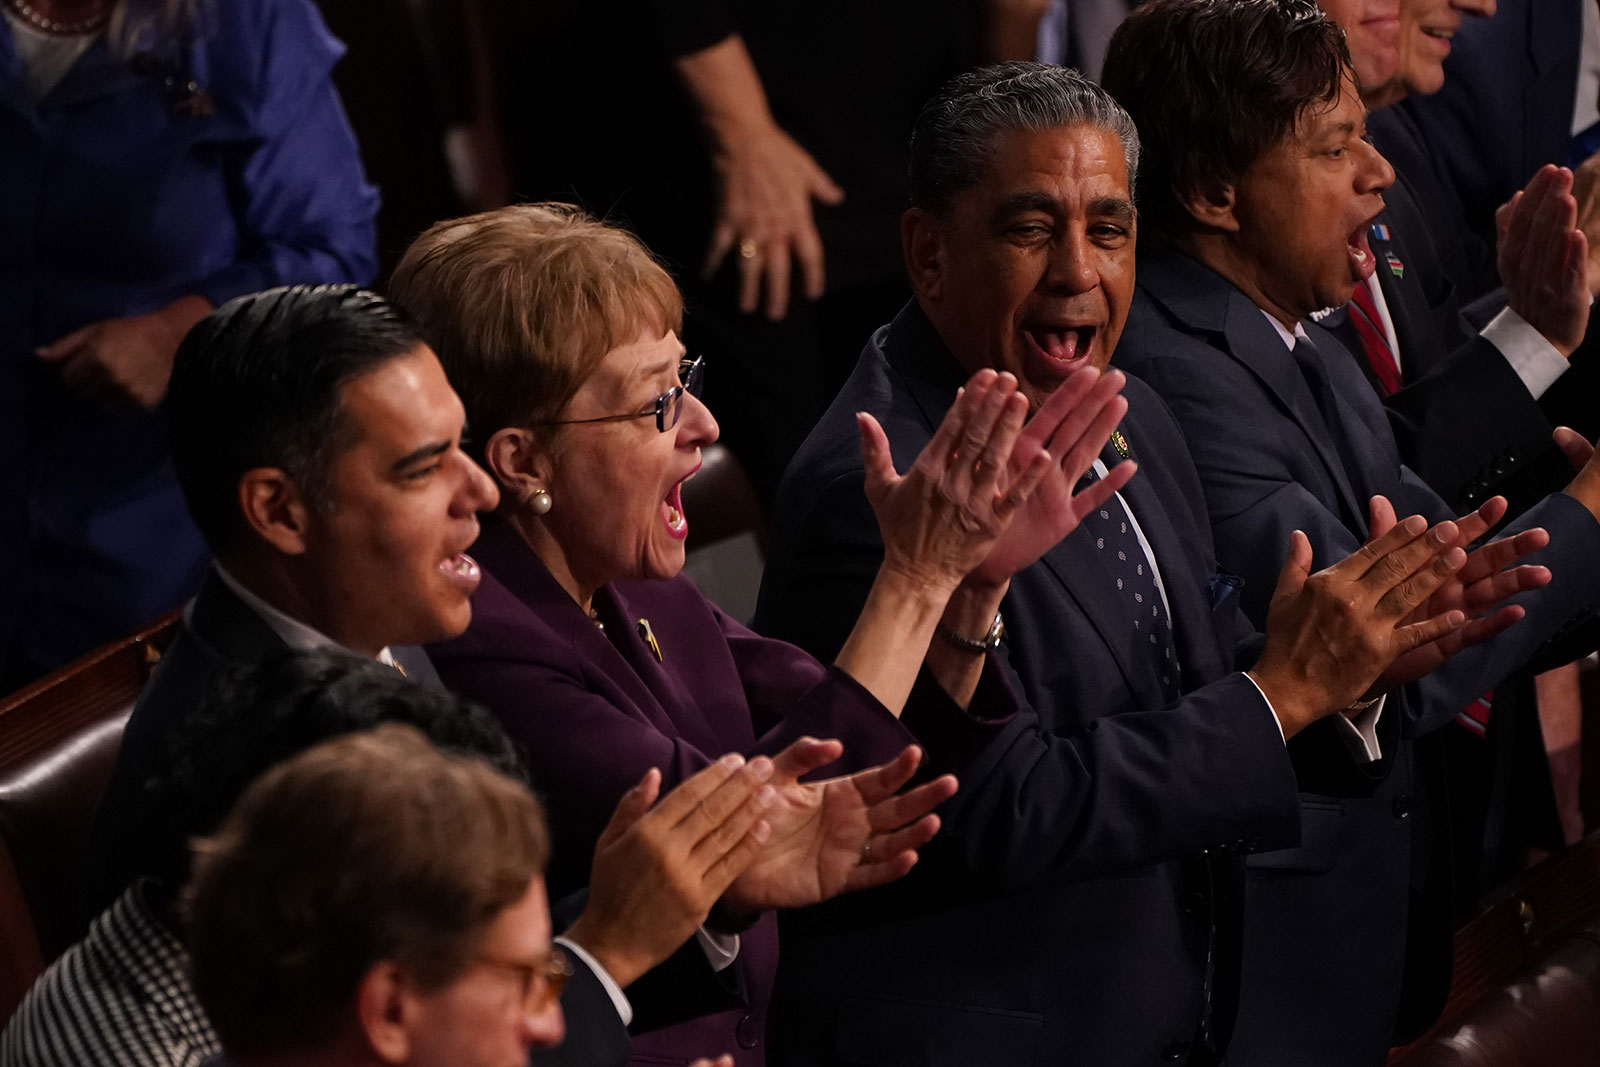 Members of Congress cheer as Biden speaks.